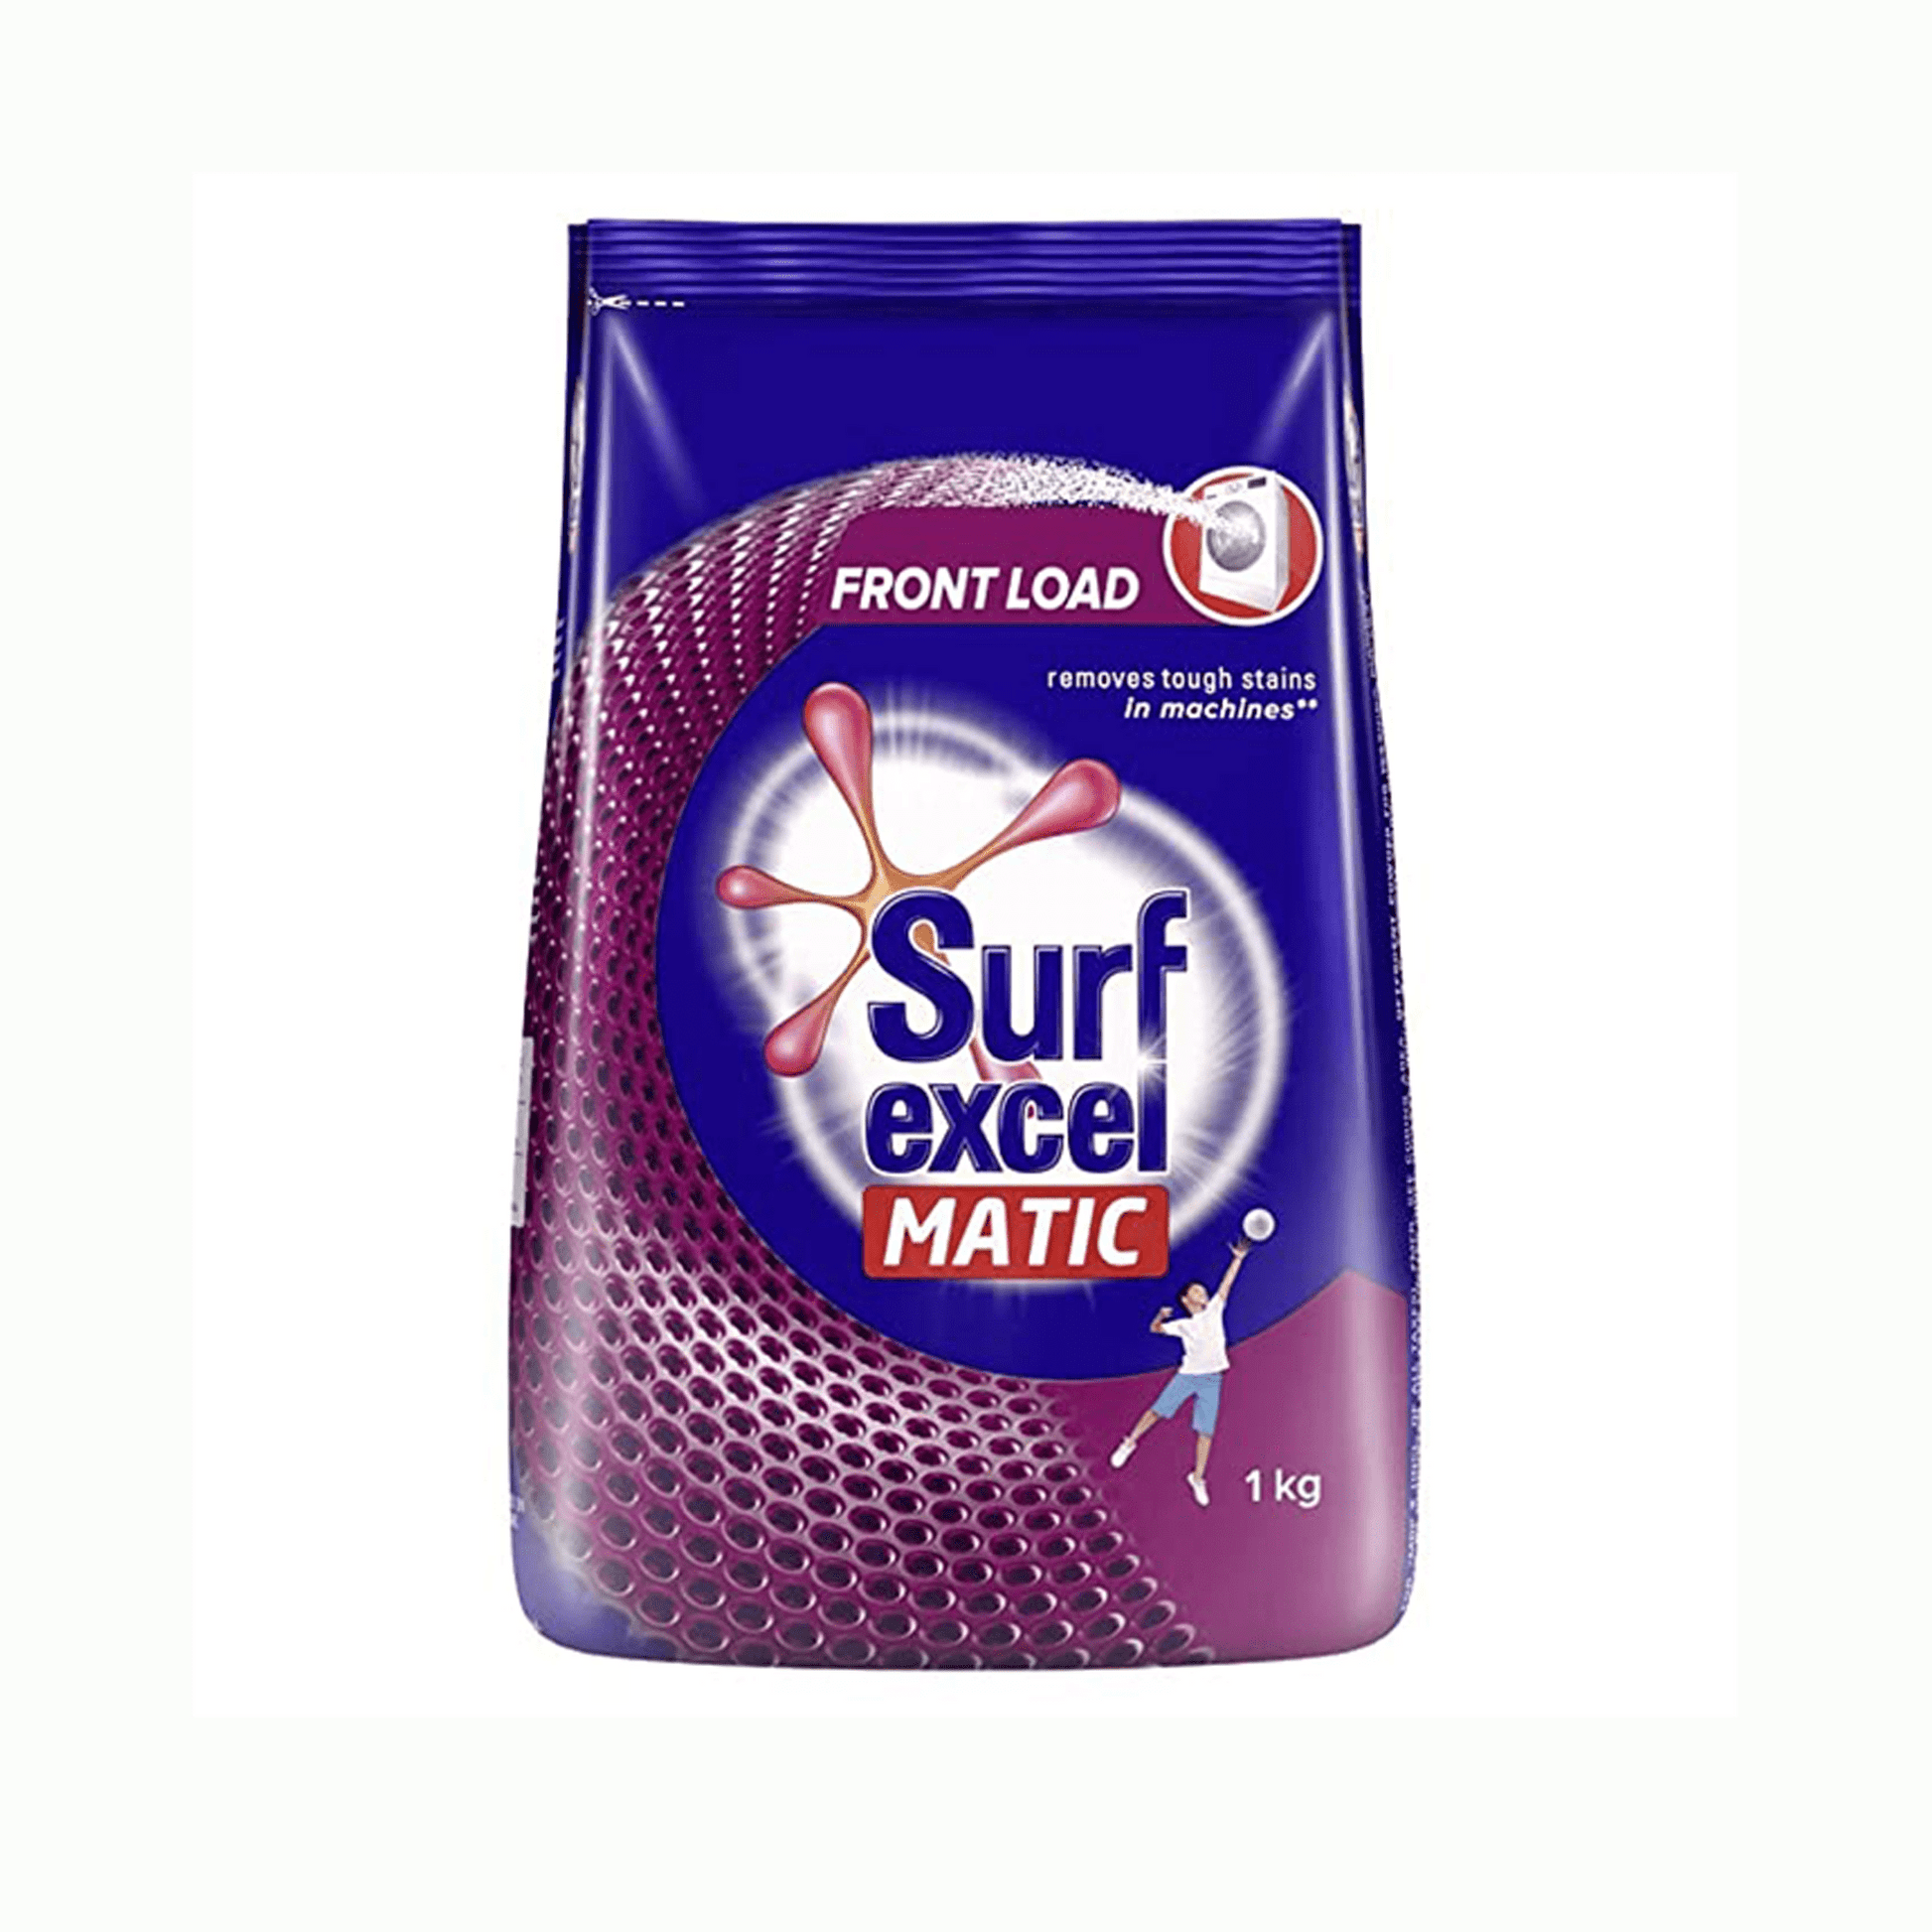 Surfexcel Matic Front Load Detergent Powder.